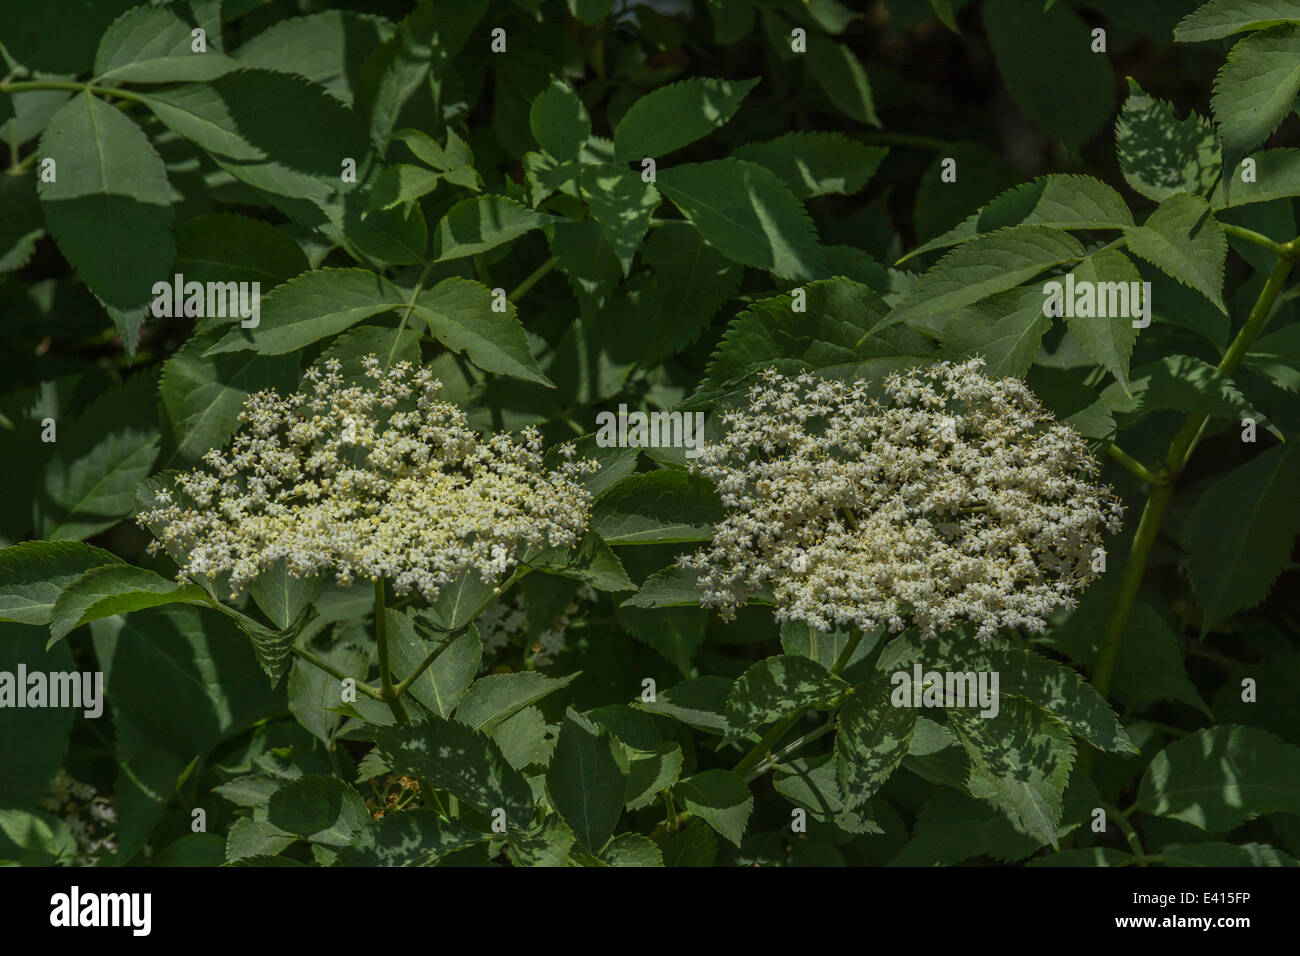 Common Elder / Sambucus nigra flowers in bloom June. Foraging and dining on the wild concept. Stock Photo